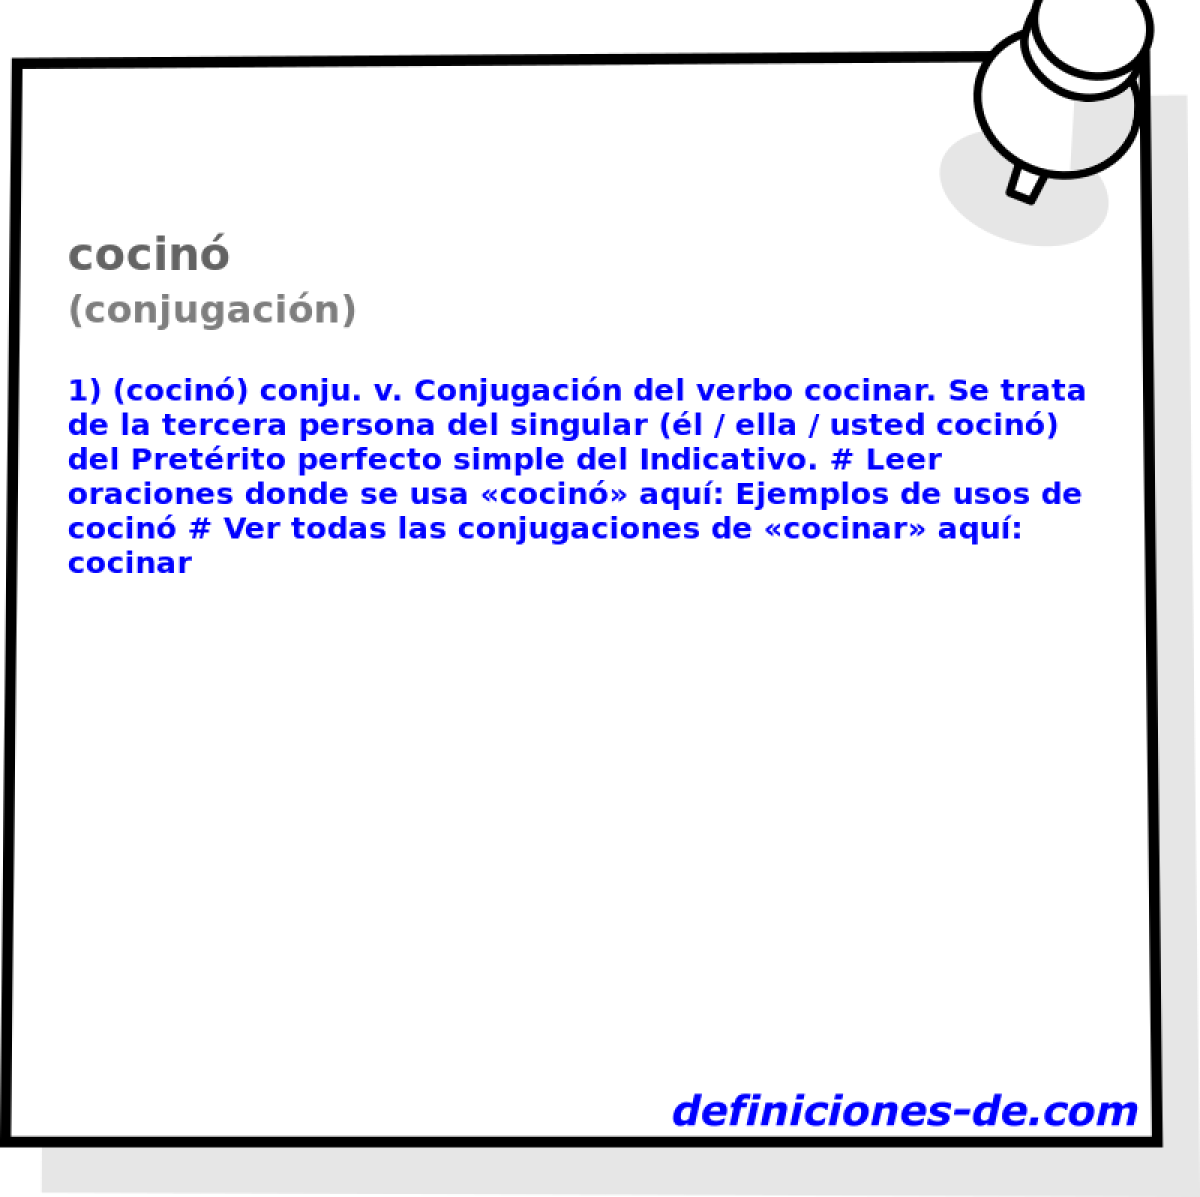 cocin (conjugacin)